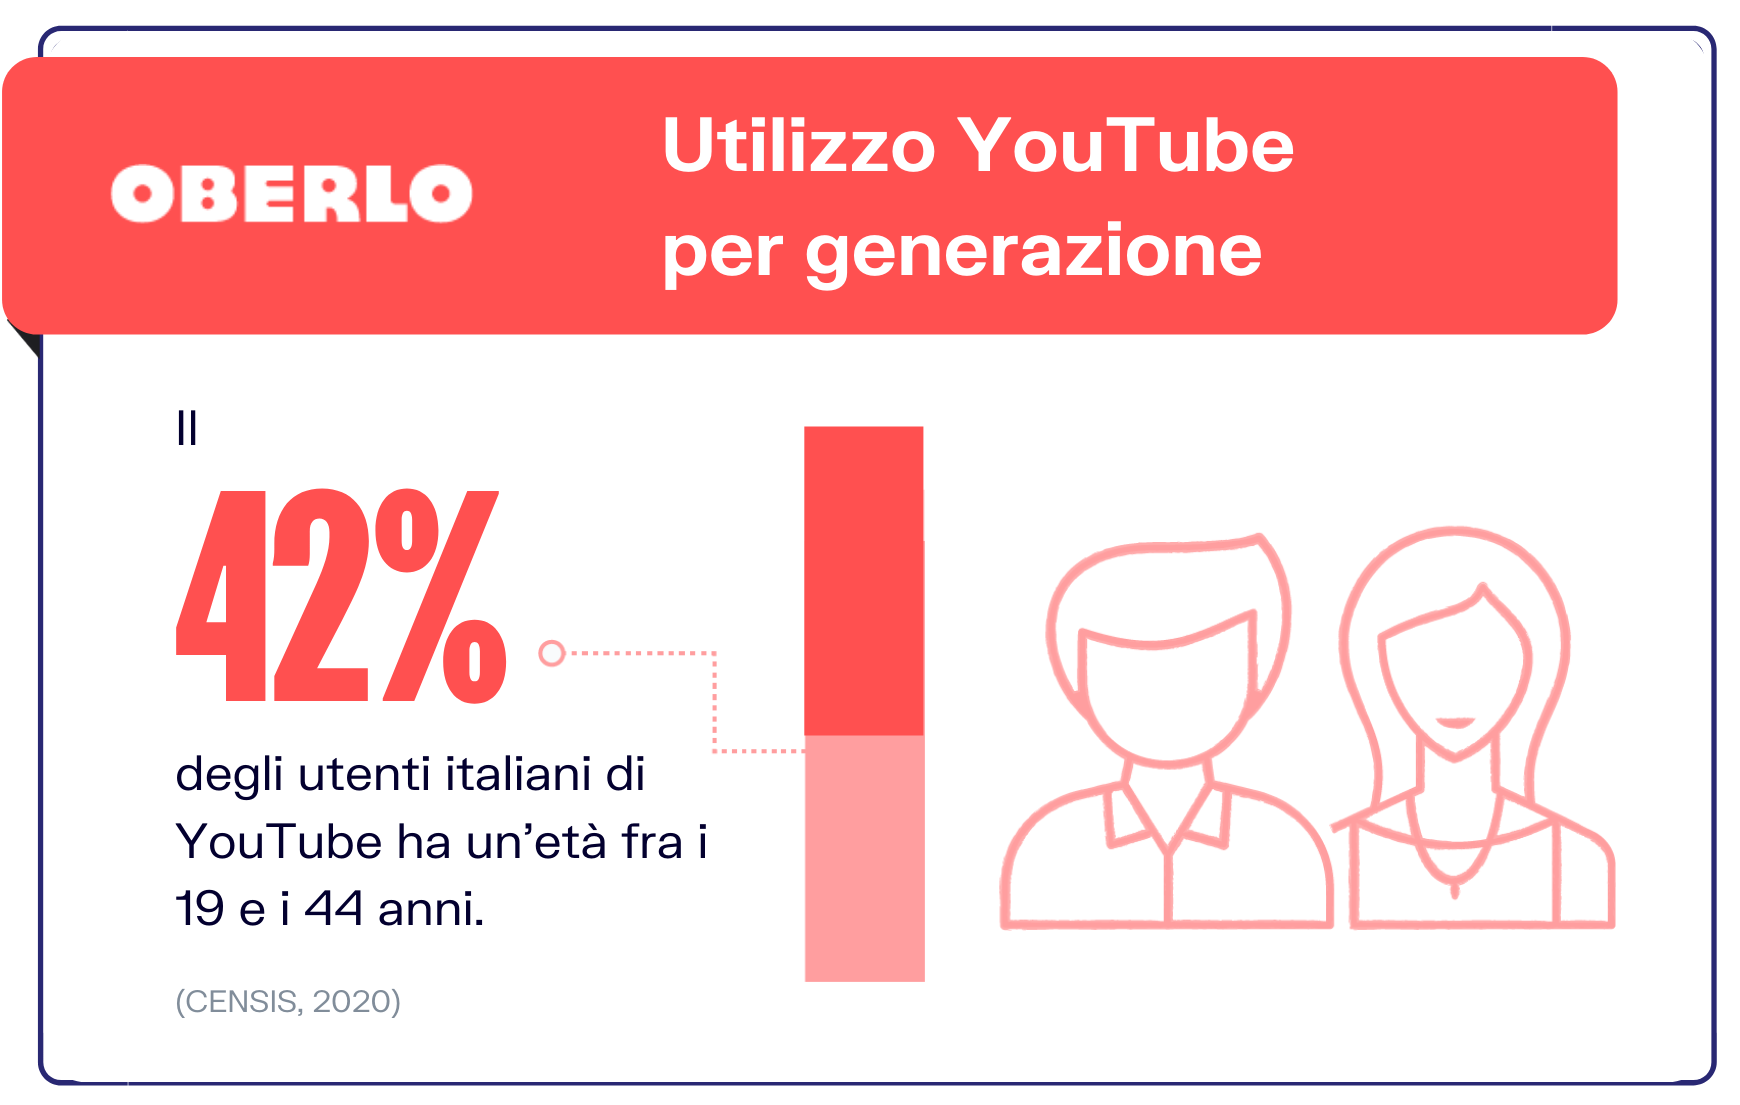 Statistiche YouTube generazione